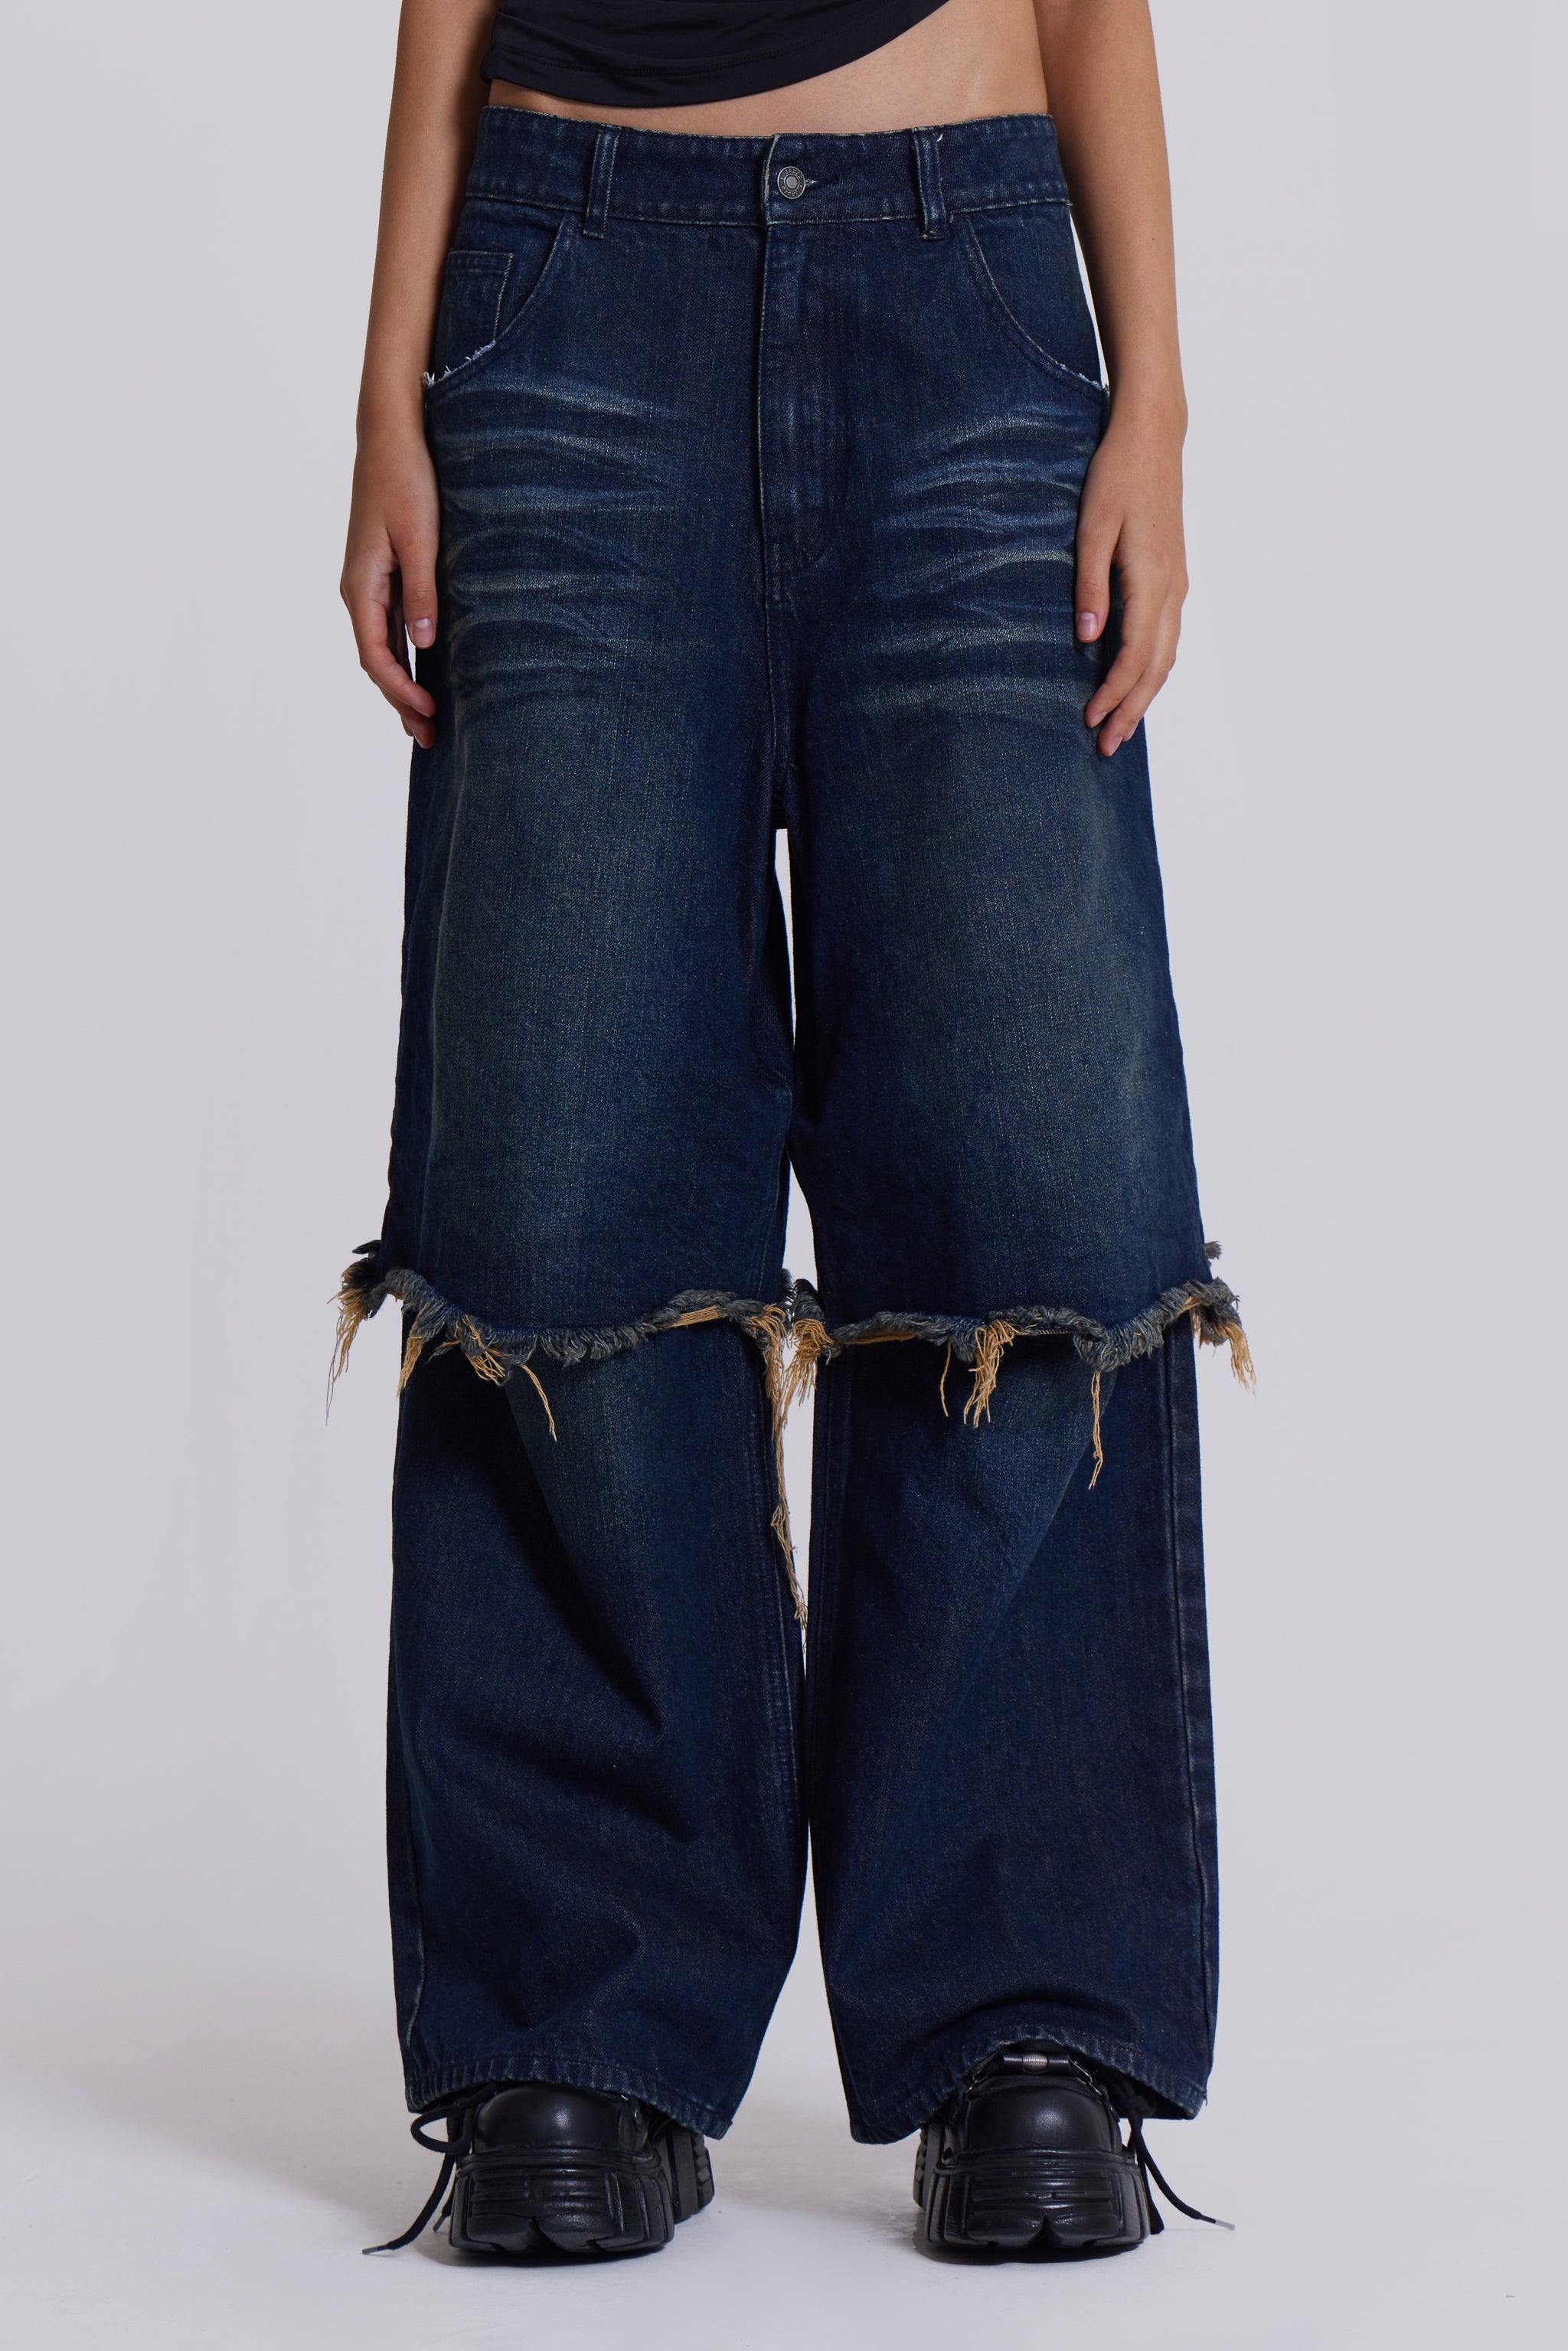 Indigo Blue Denim Double Layer Jort Jeans | Jaded London